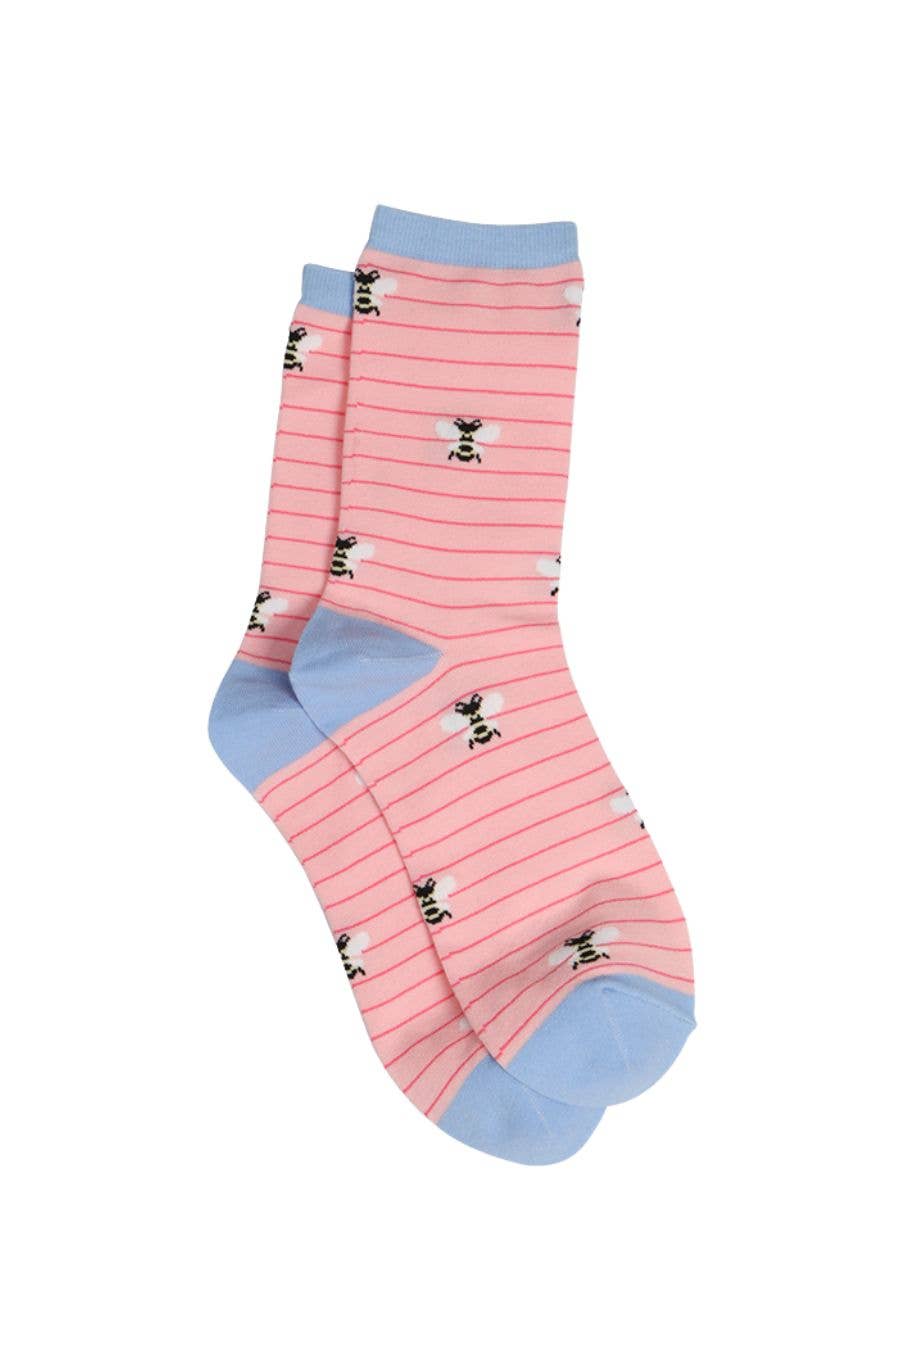 Sock Talk - Womens Bamboo Bee Socks Bumblebees Striped Novelty Sock Pink